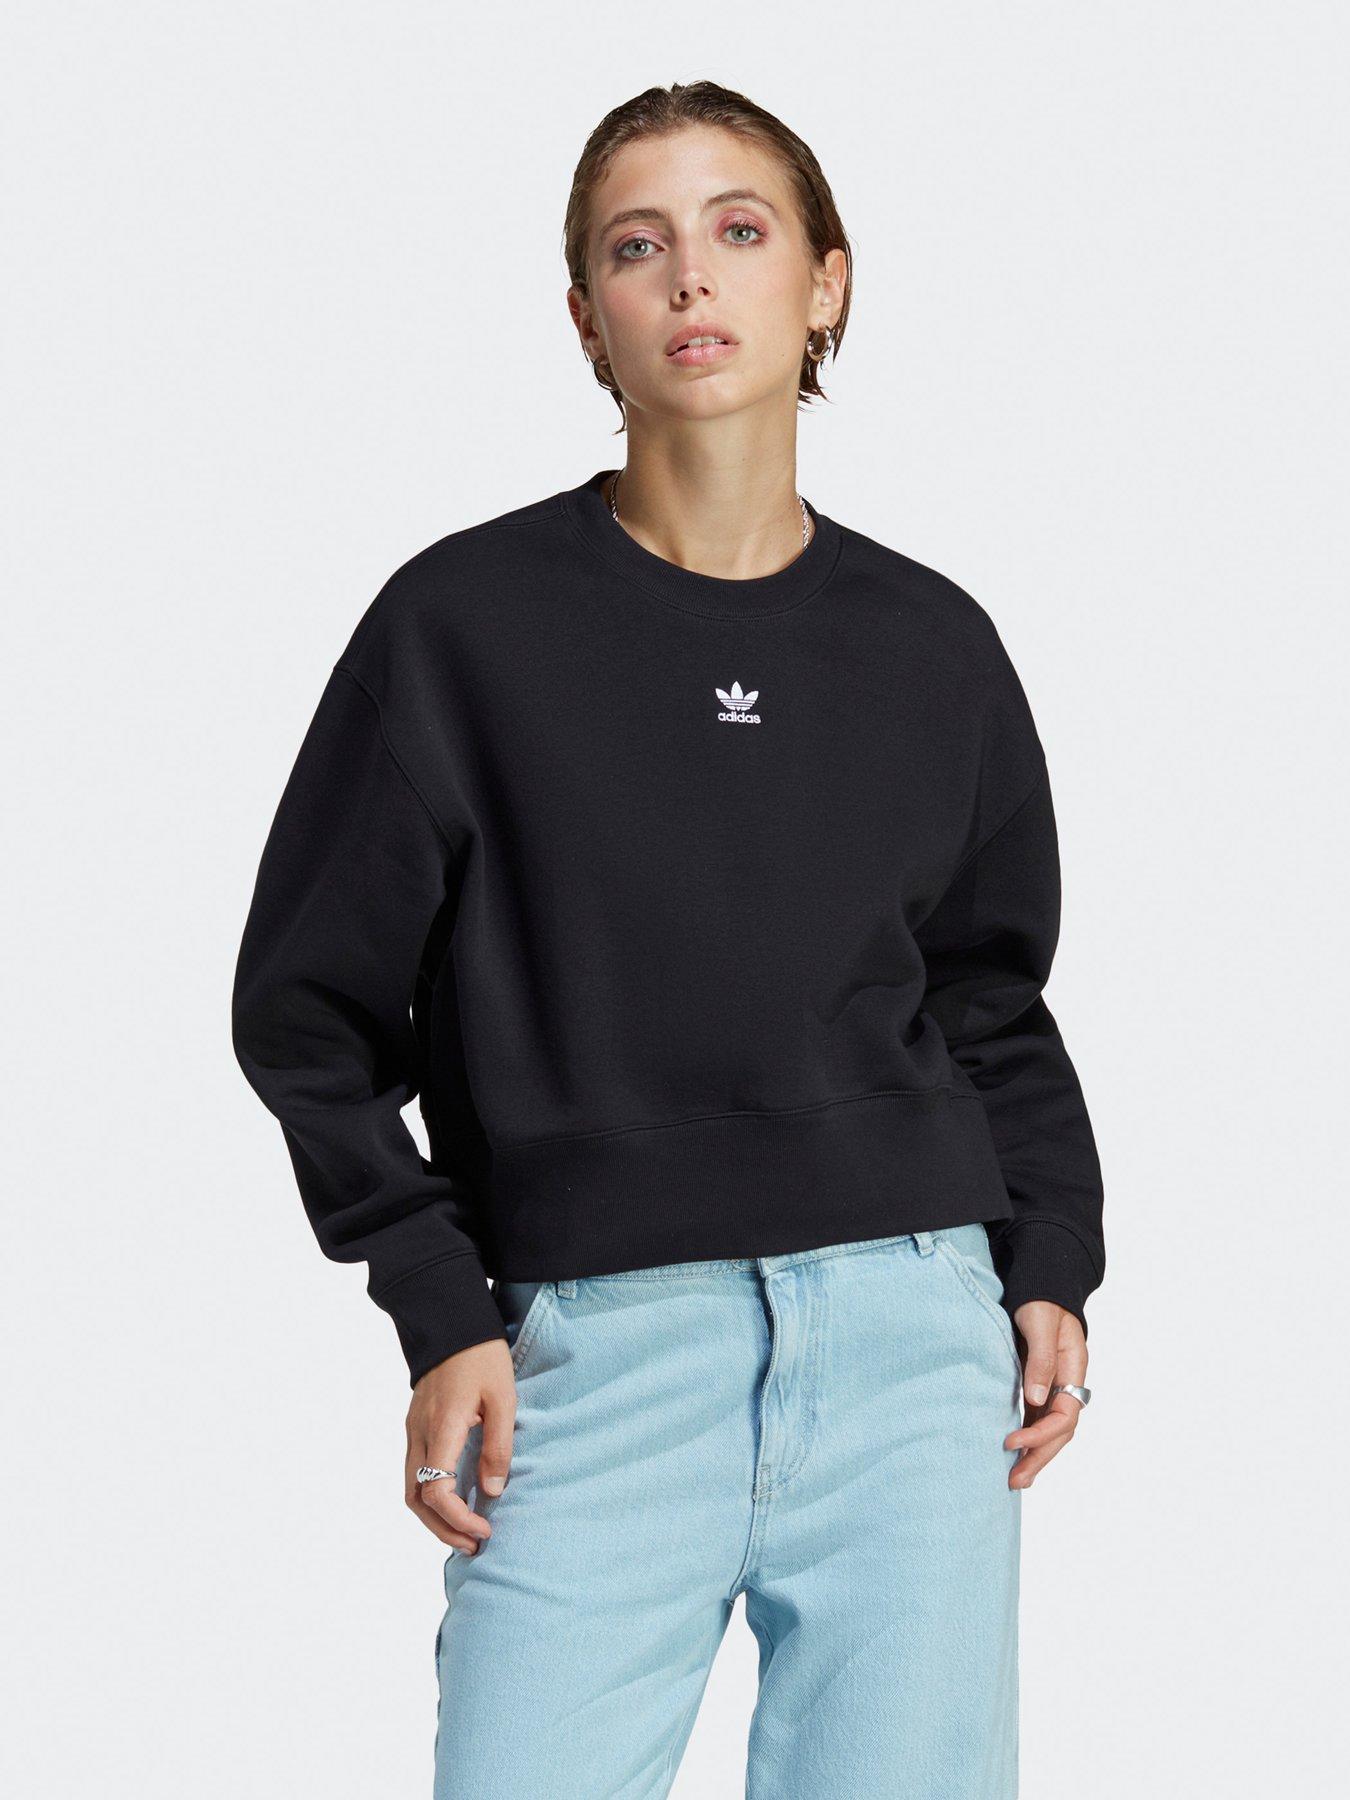 adidas Originals Sweatshirt - Black, Black, Size Xs, Women